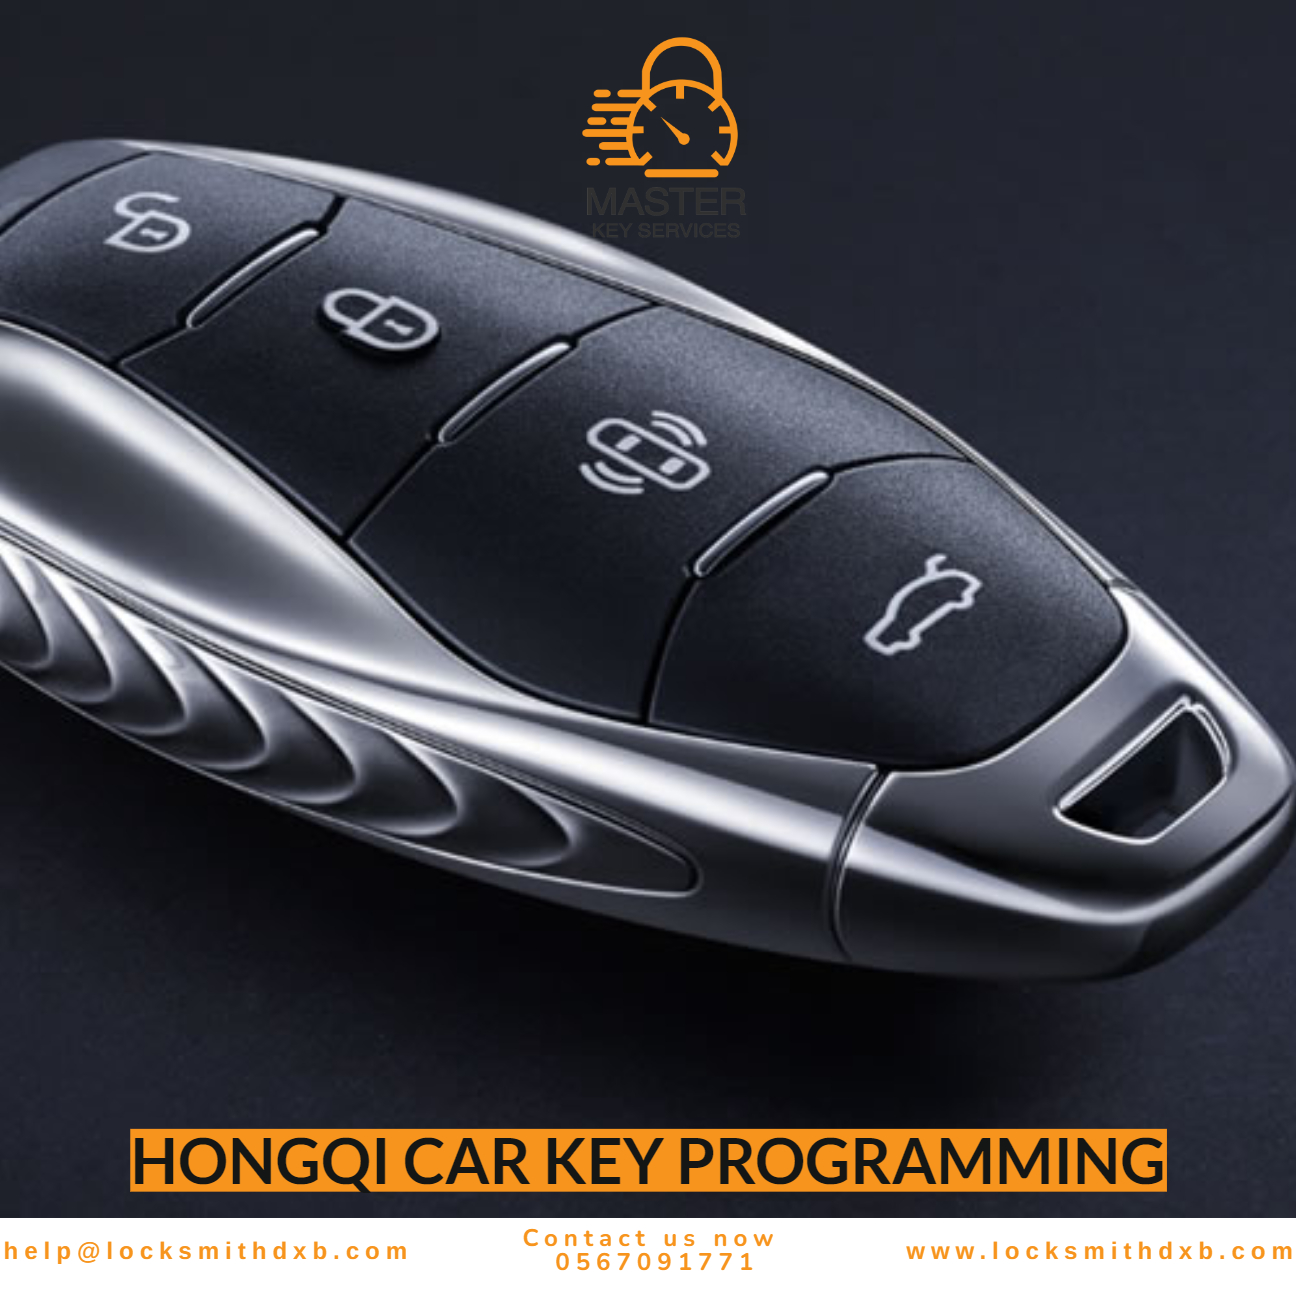 HONGQI car key programming